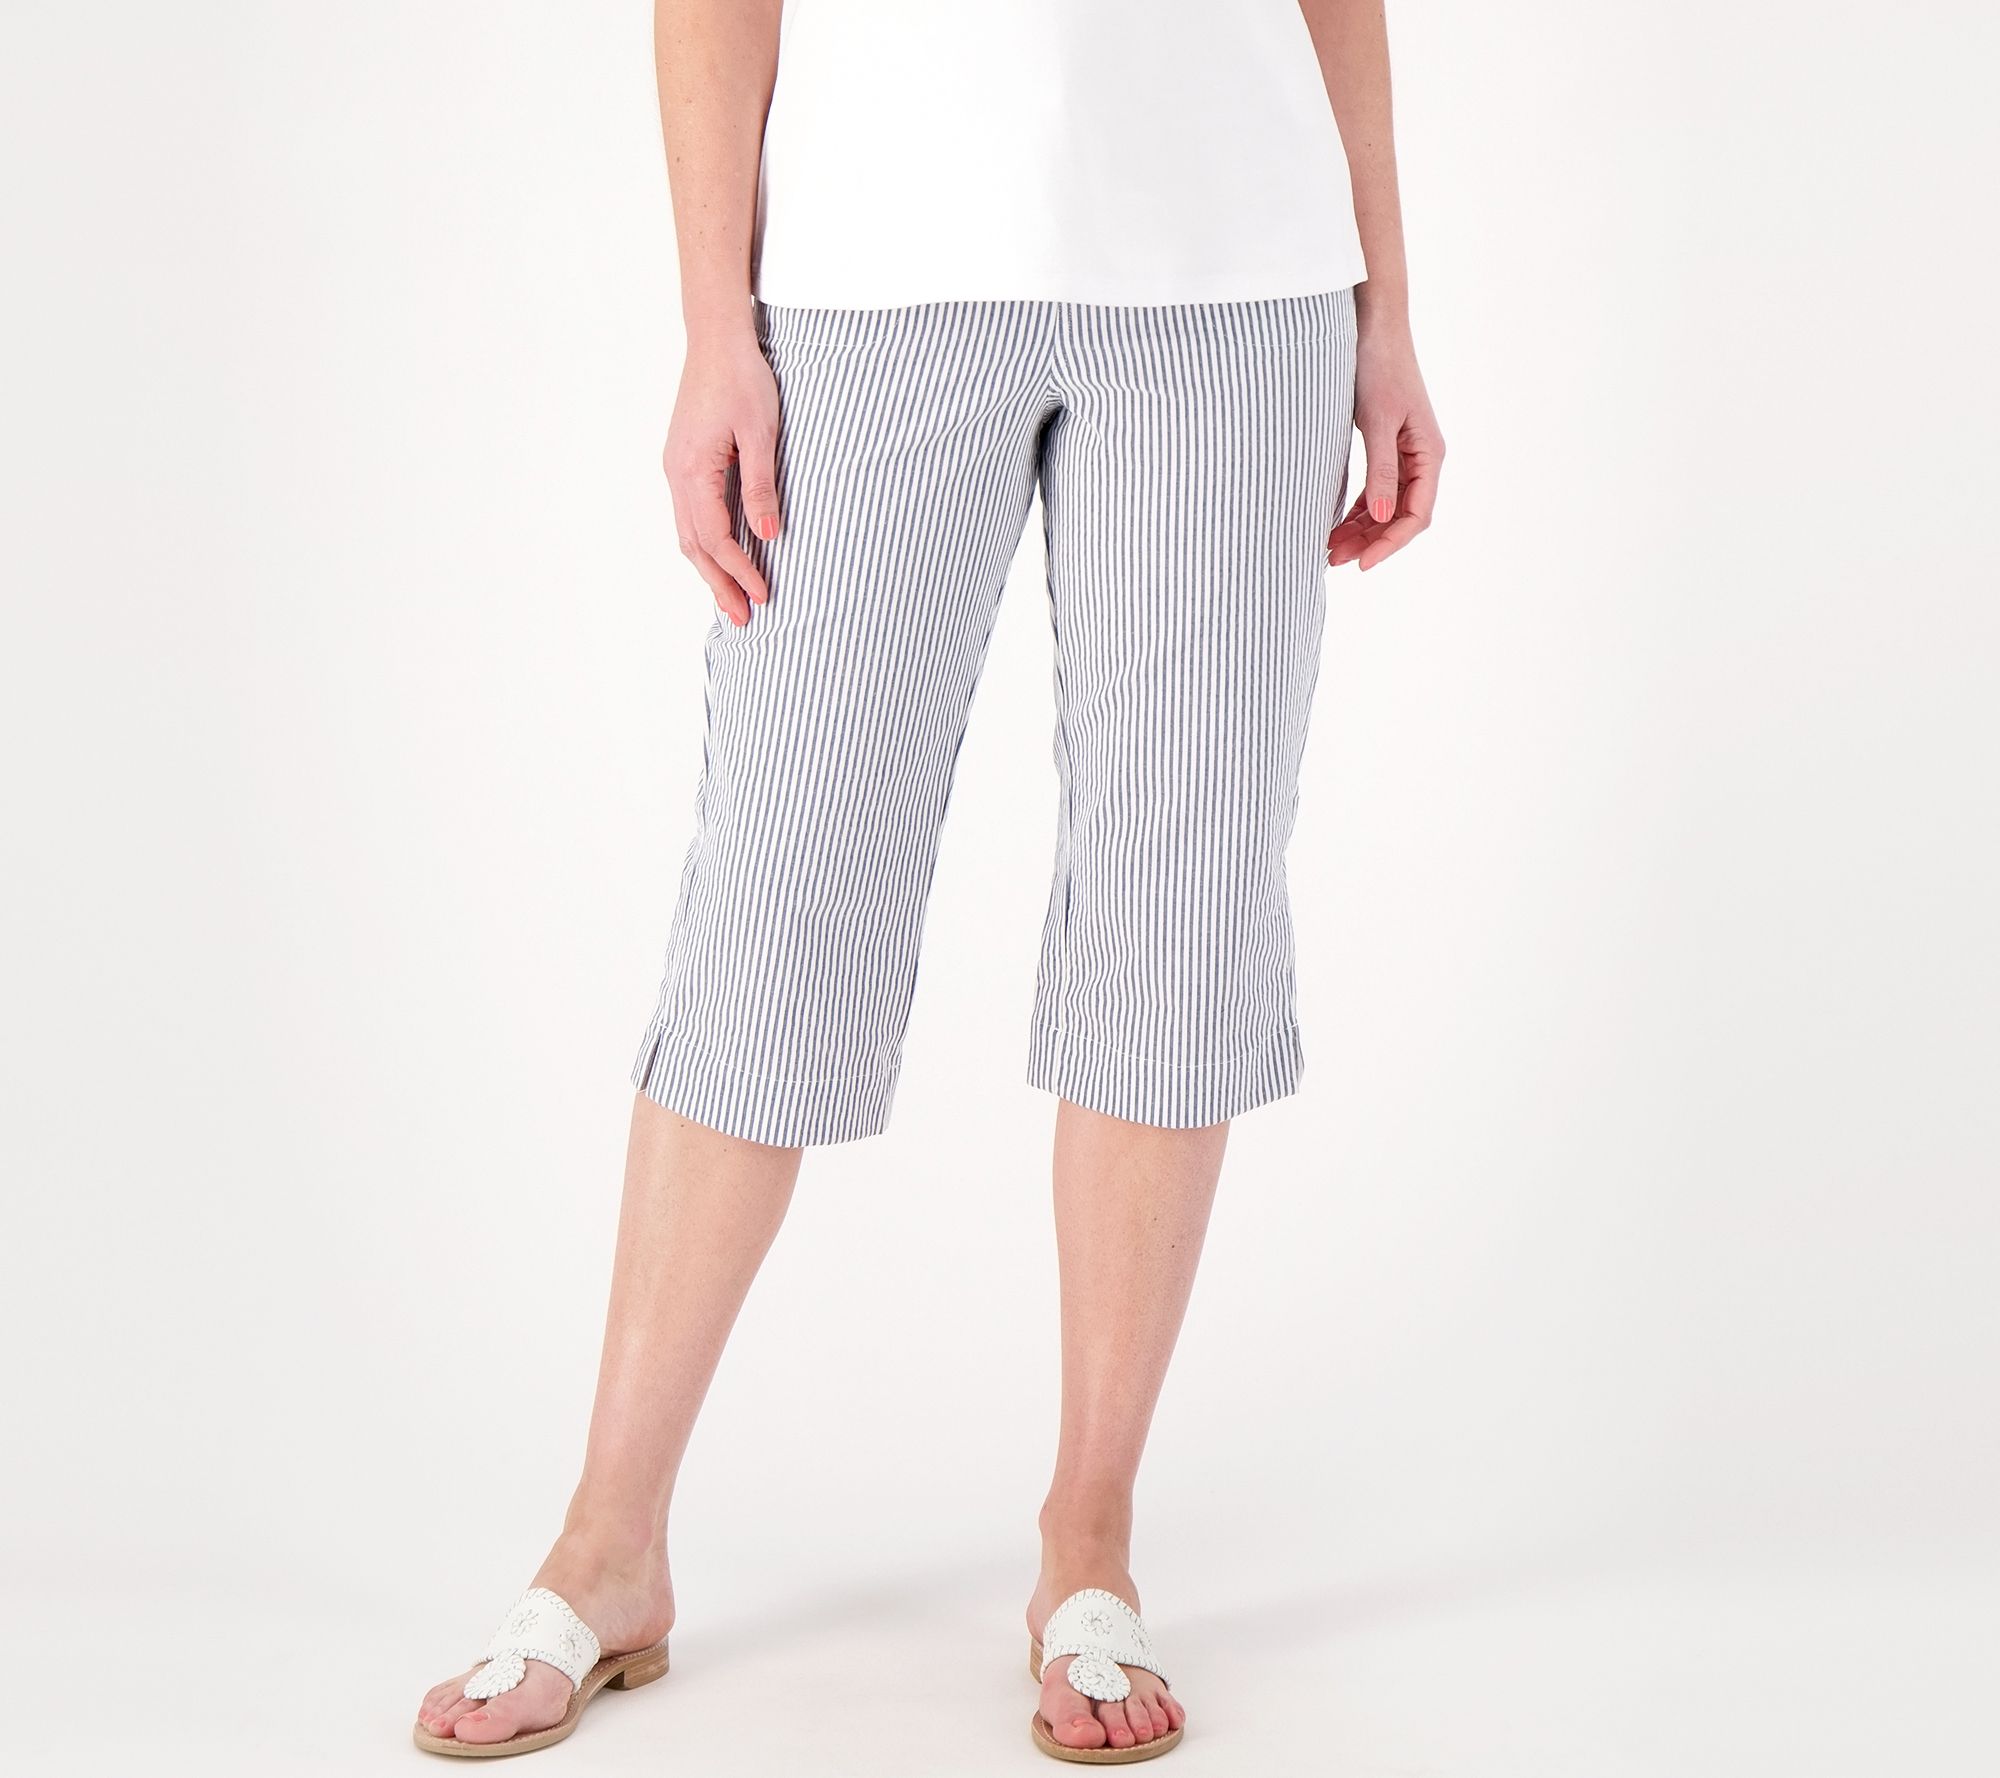 Women's Shorts  Capri Pants for Women from Sears